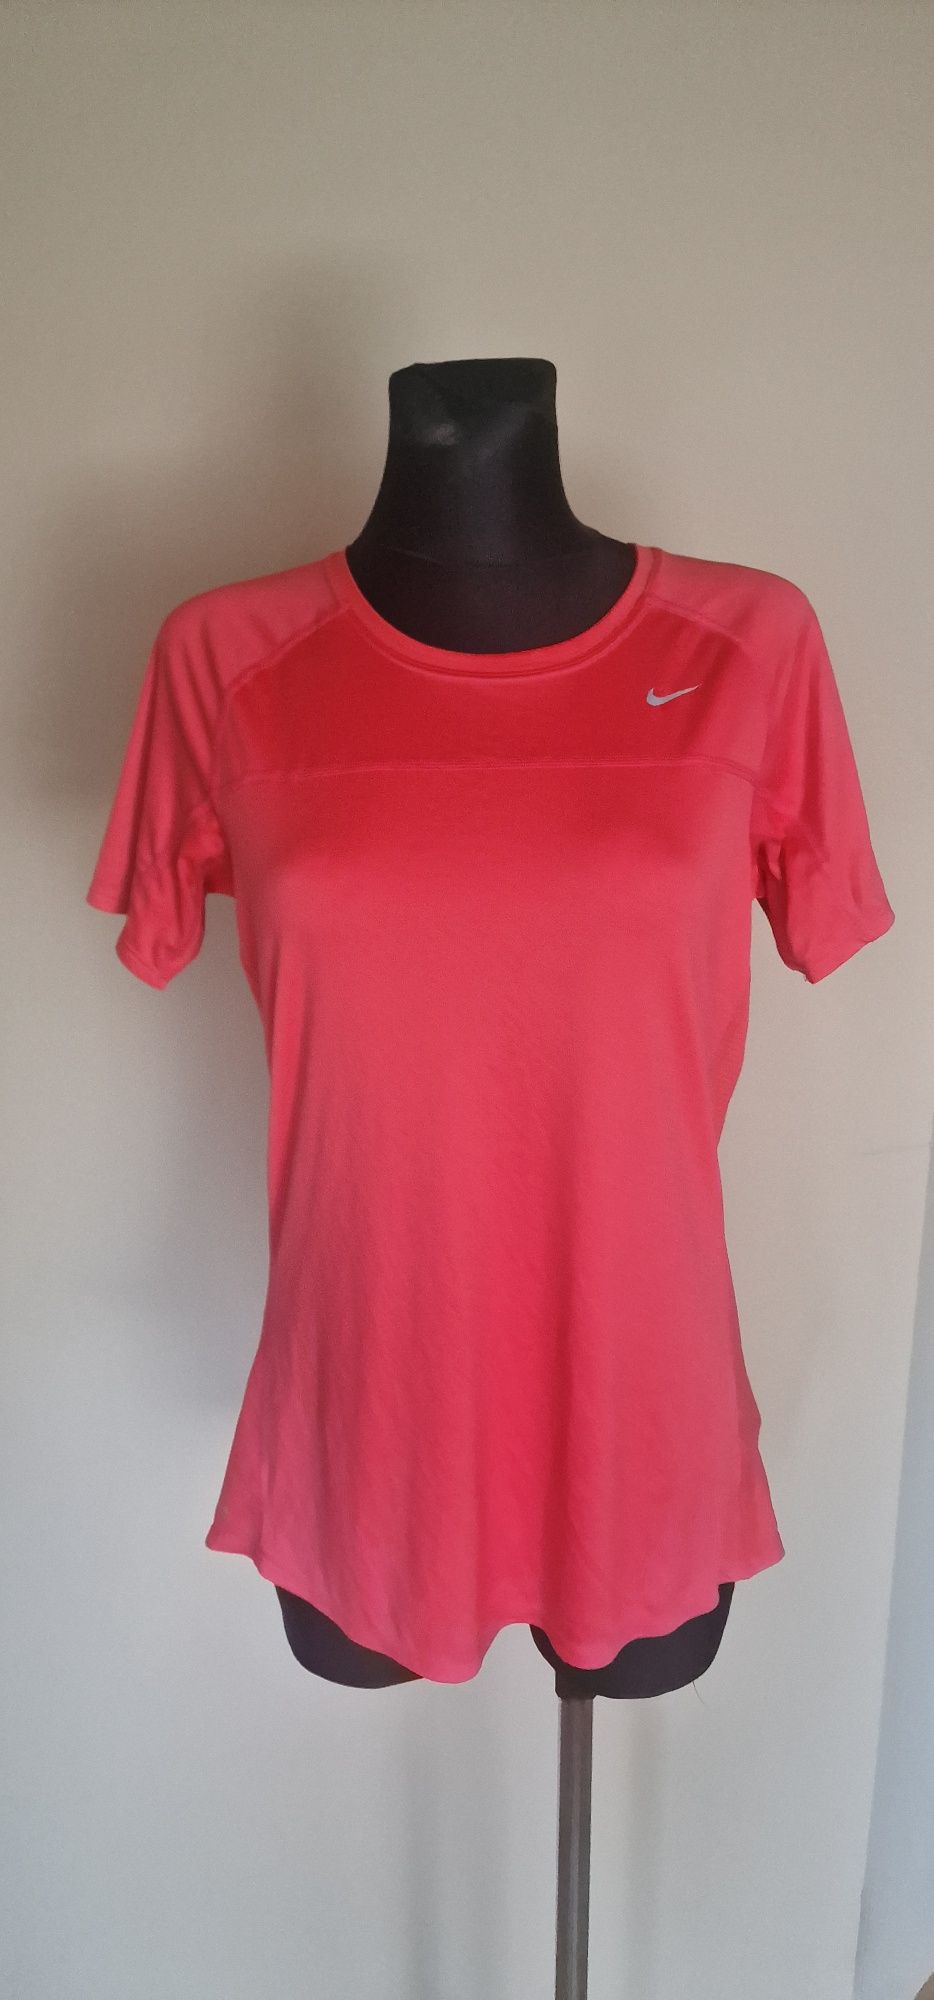 Nike miler rozmiar L koszulka damska sportowa